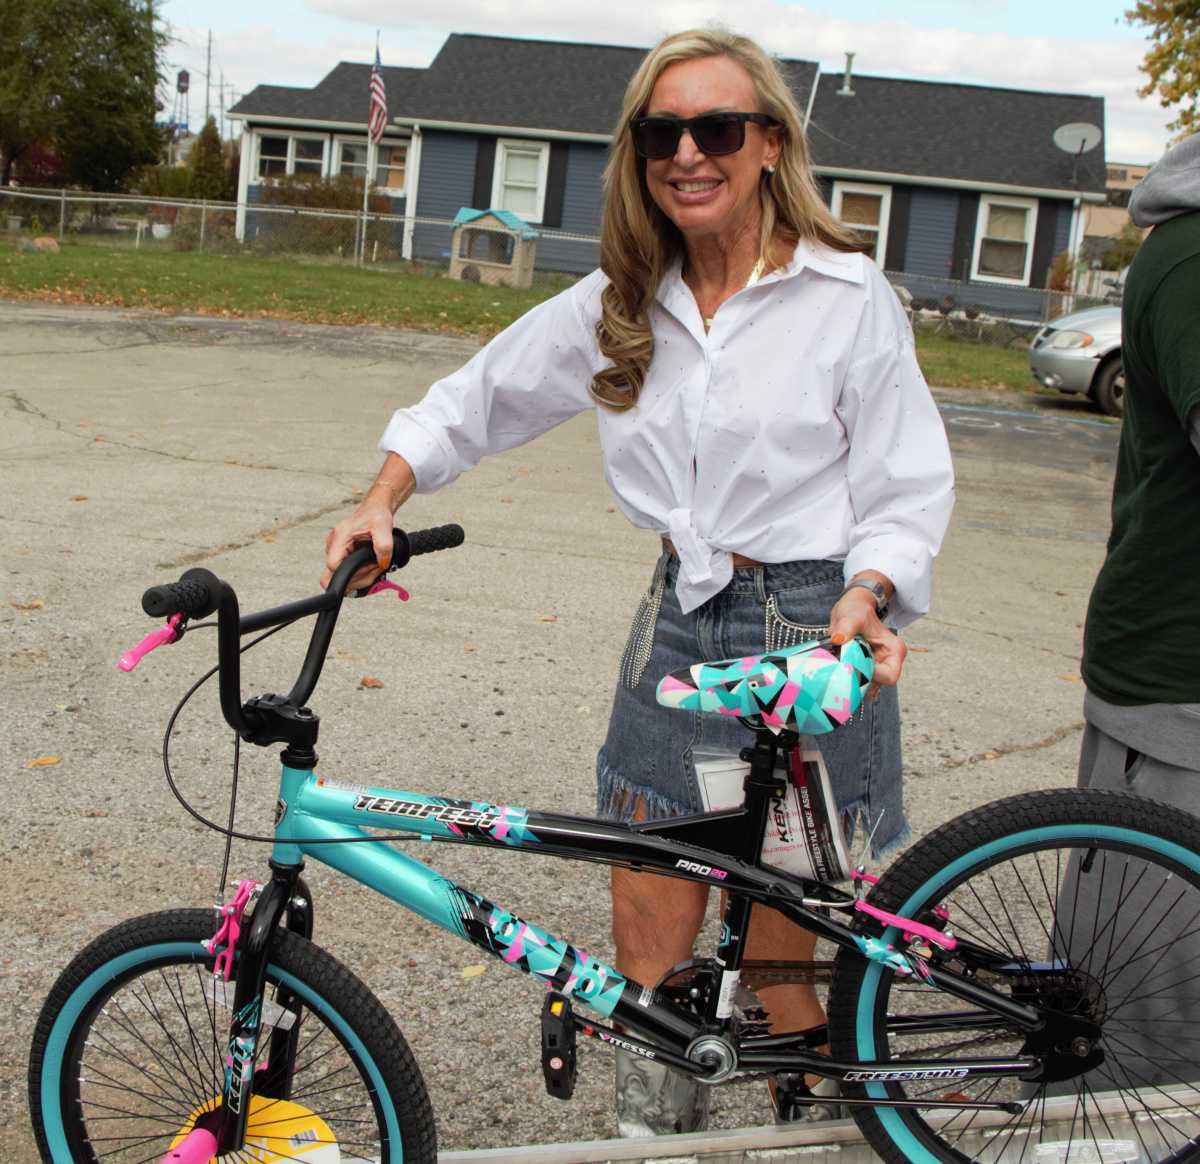 Bike donation keeps twin's memory alive